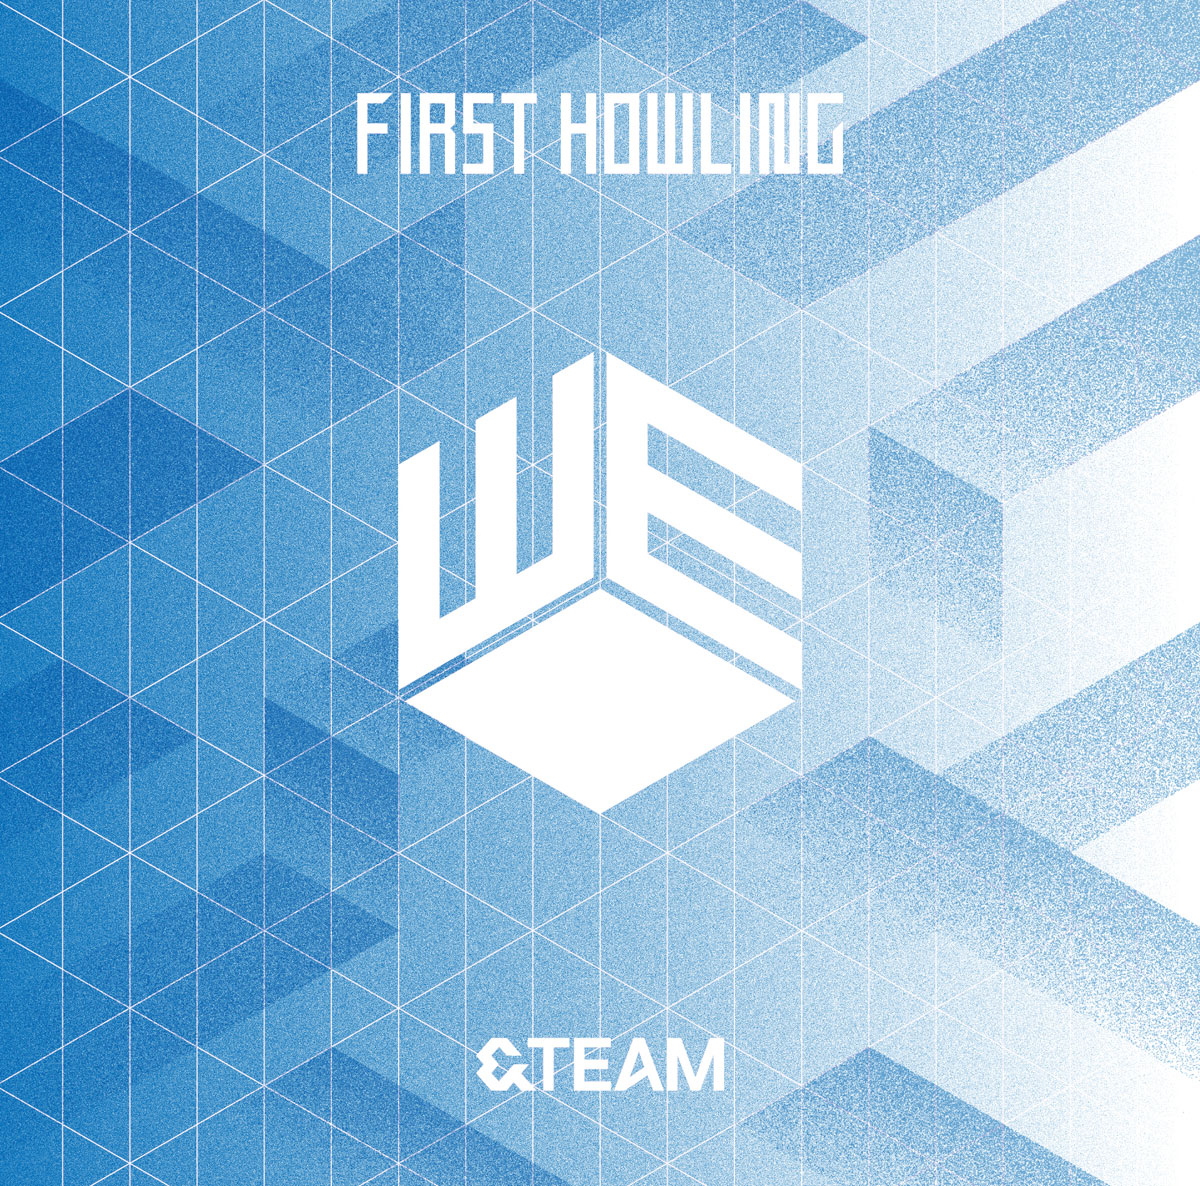 &TEAM 最新アルバム「First Howling:WE」がオリコン音楽ランキングでグループ初の3冠達成!